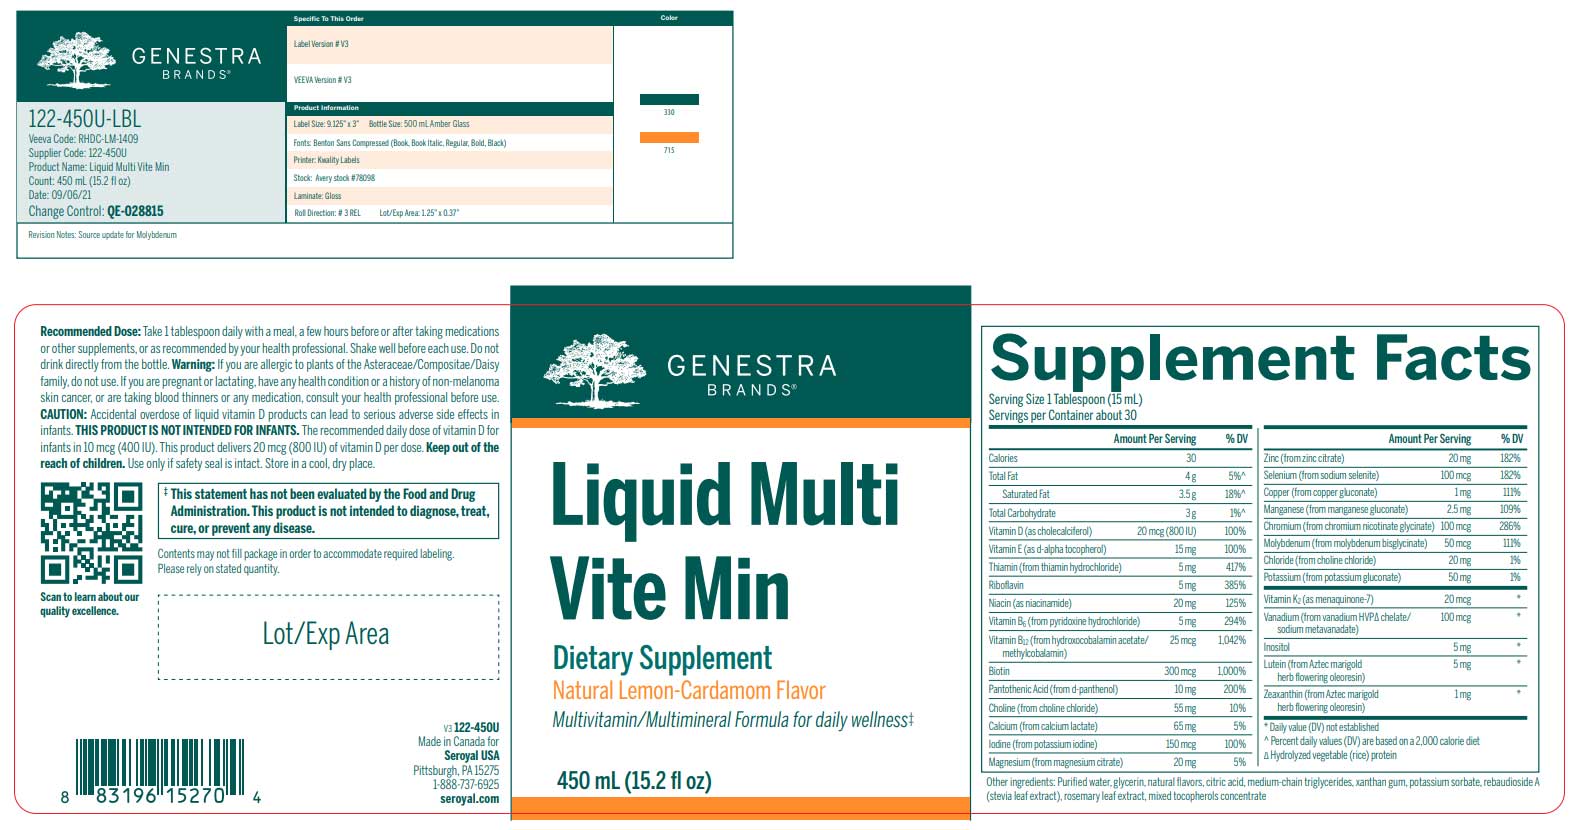 Genestra Brands Liquid Multi Vite Min Label